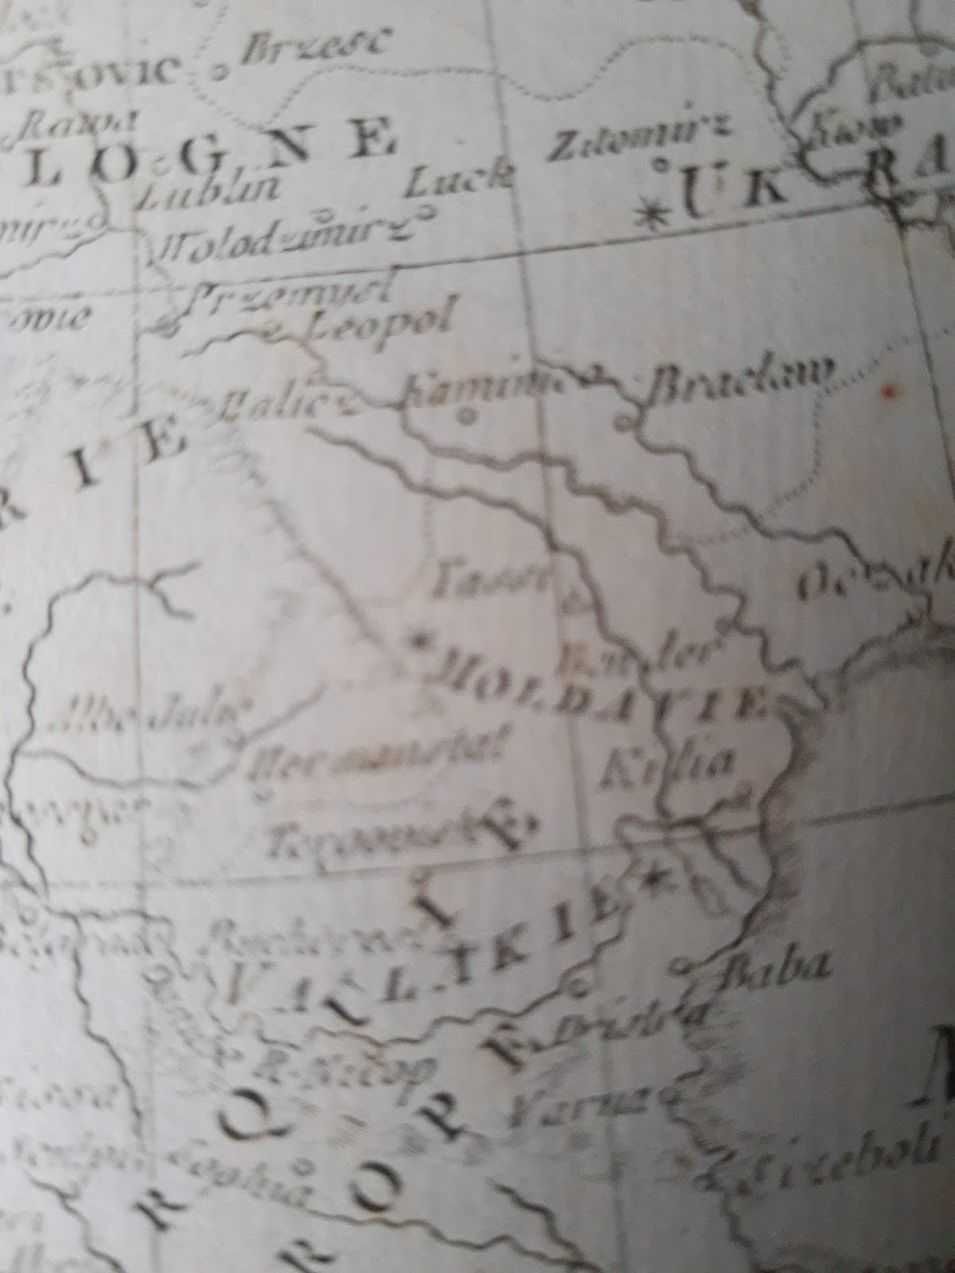 Harta a Europei, tiparitura originala din 1780